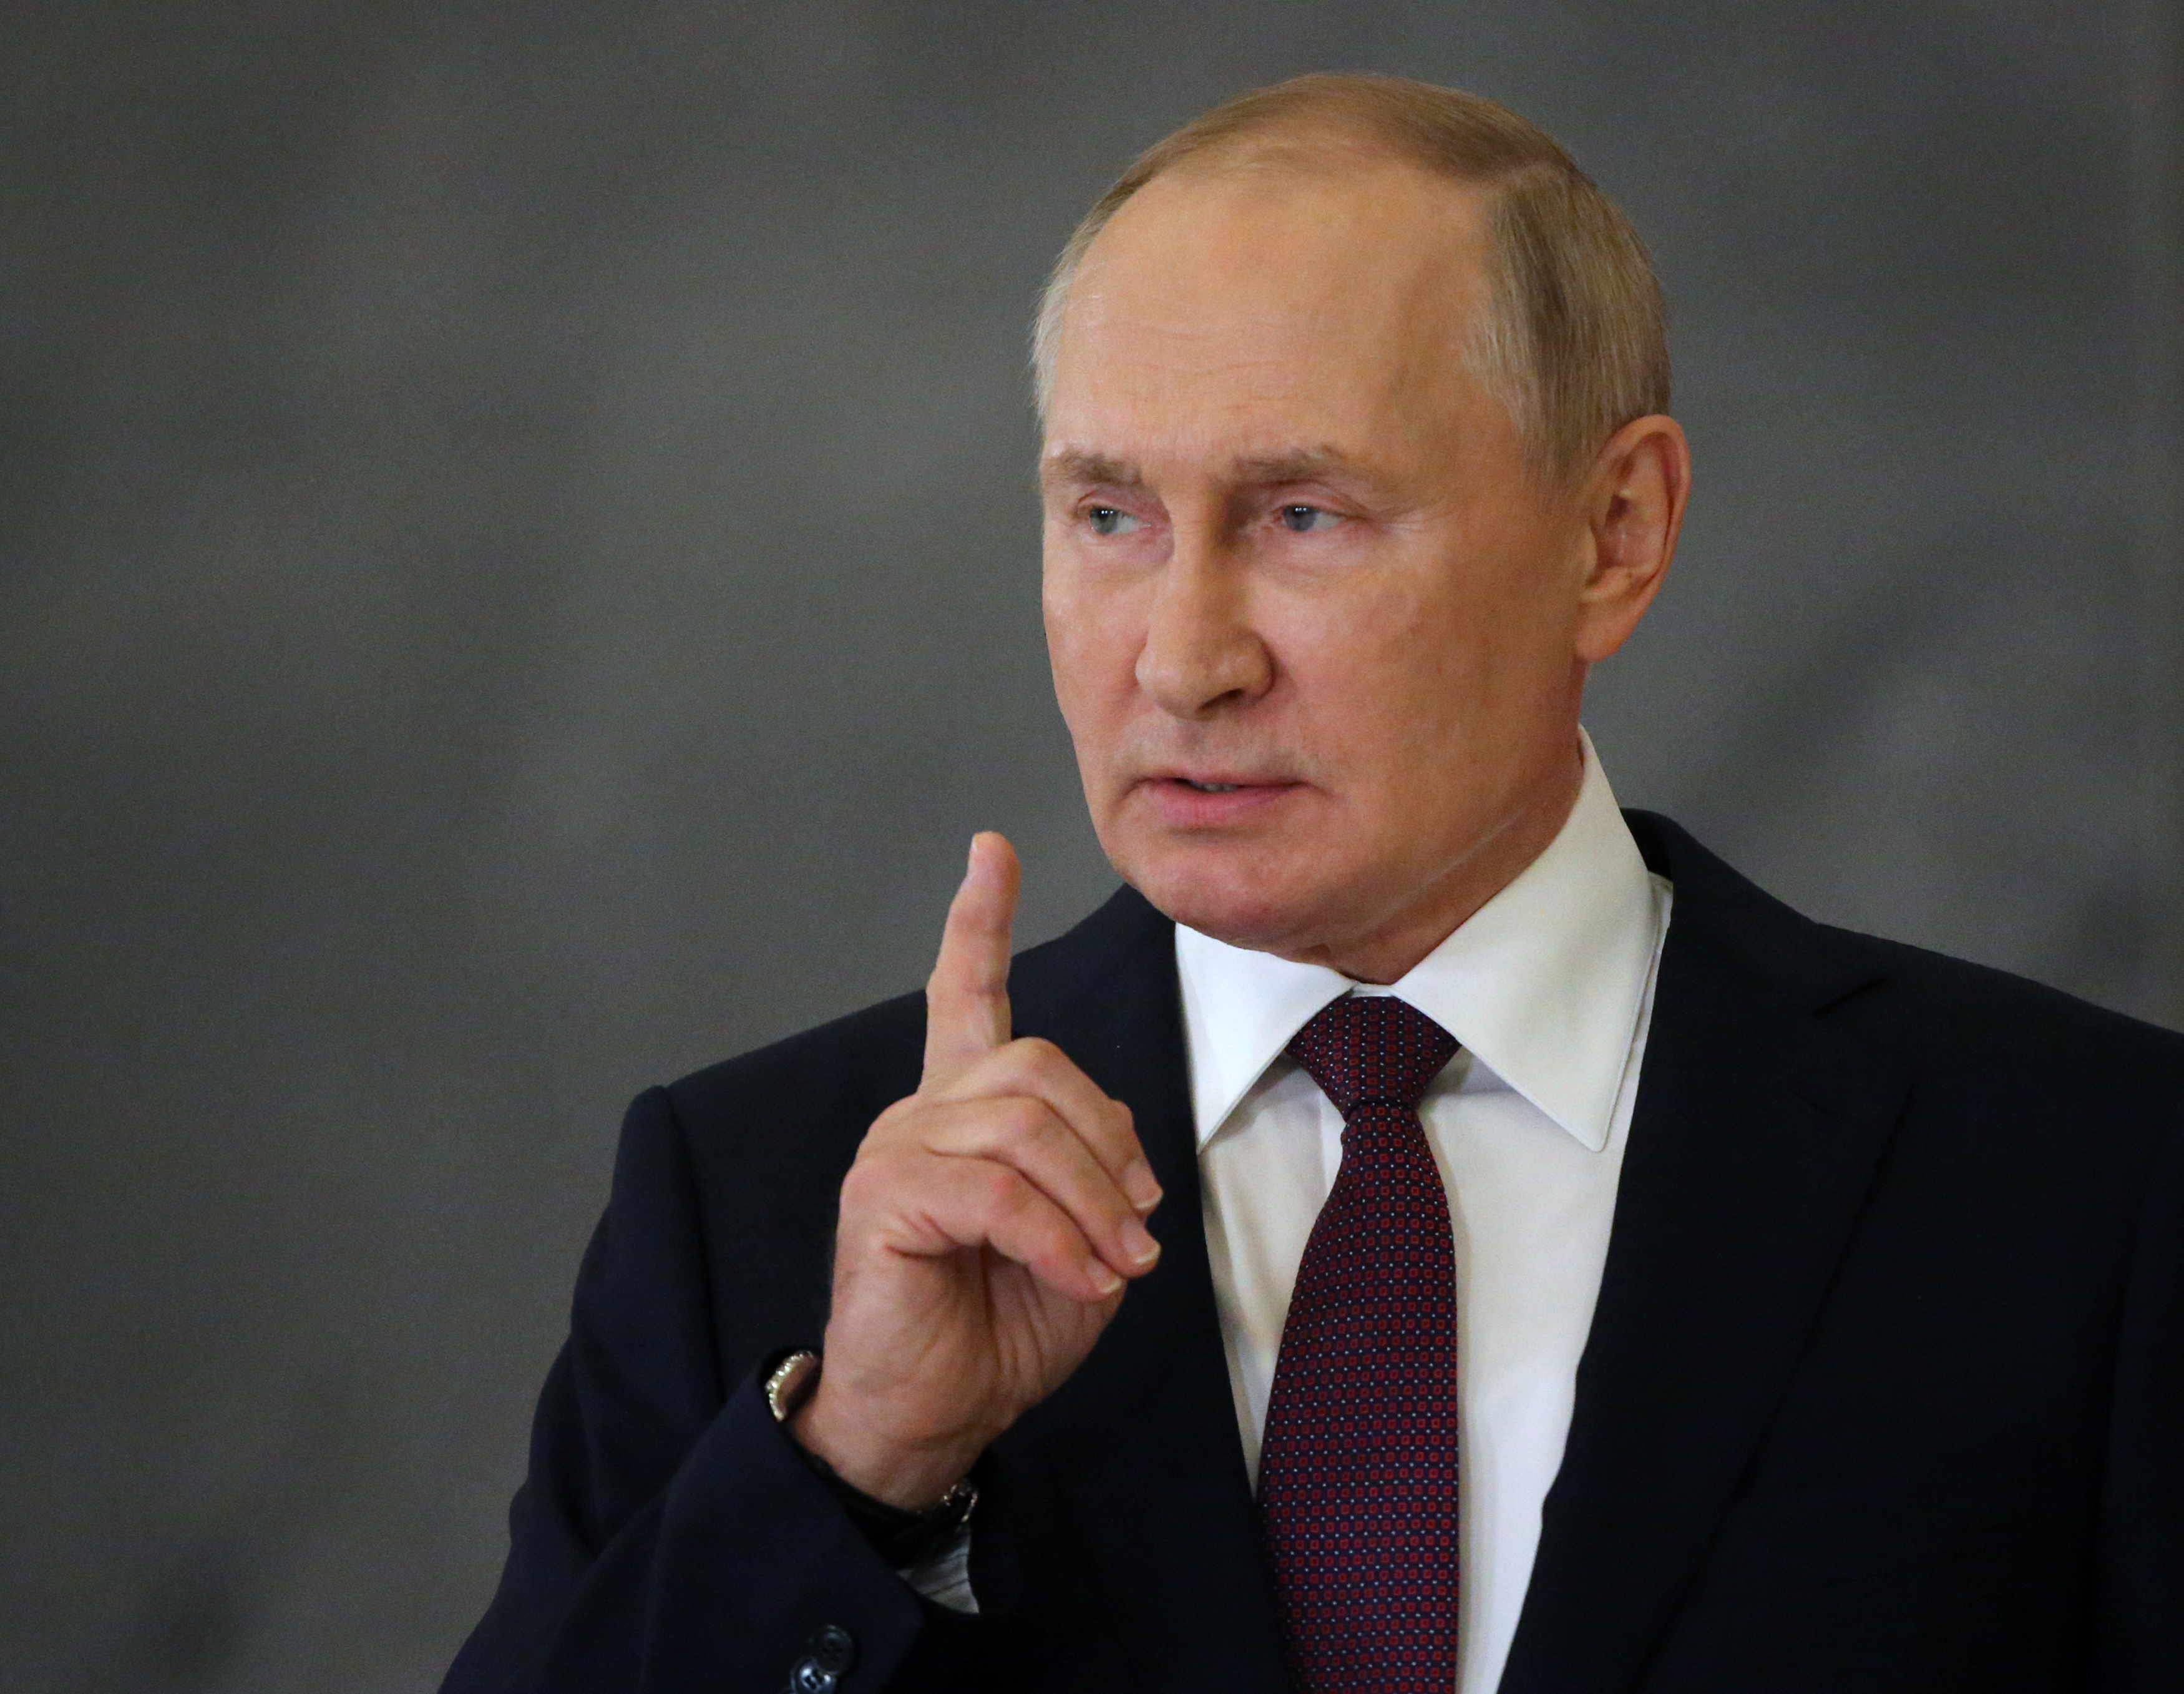 Putin Can't Easily Silence His Latest Critics